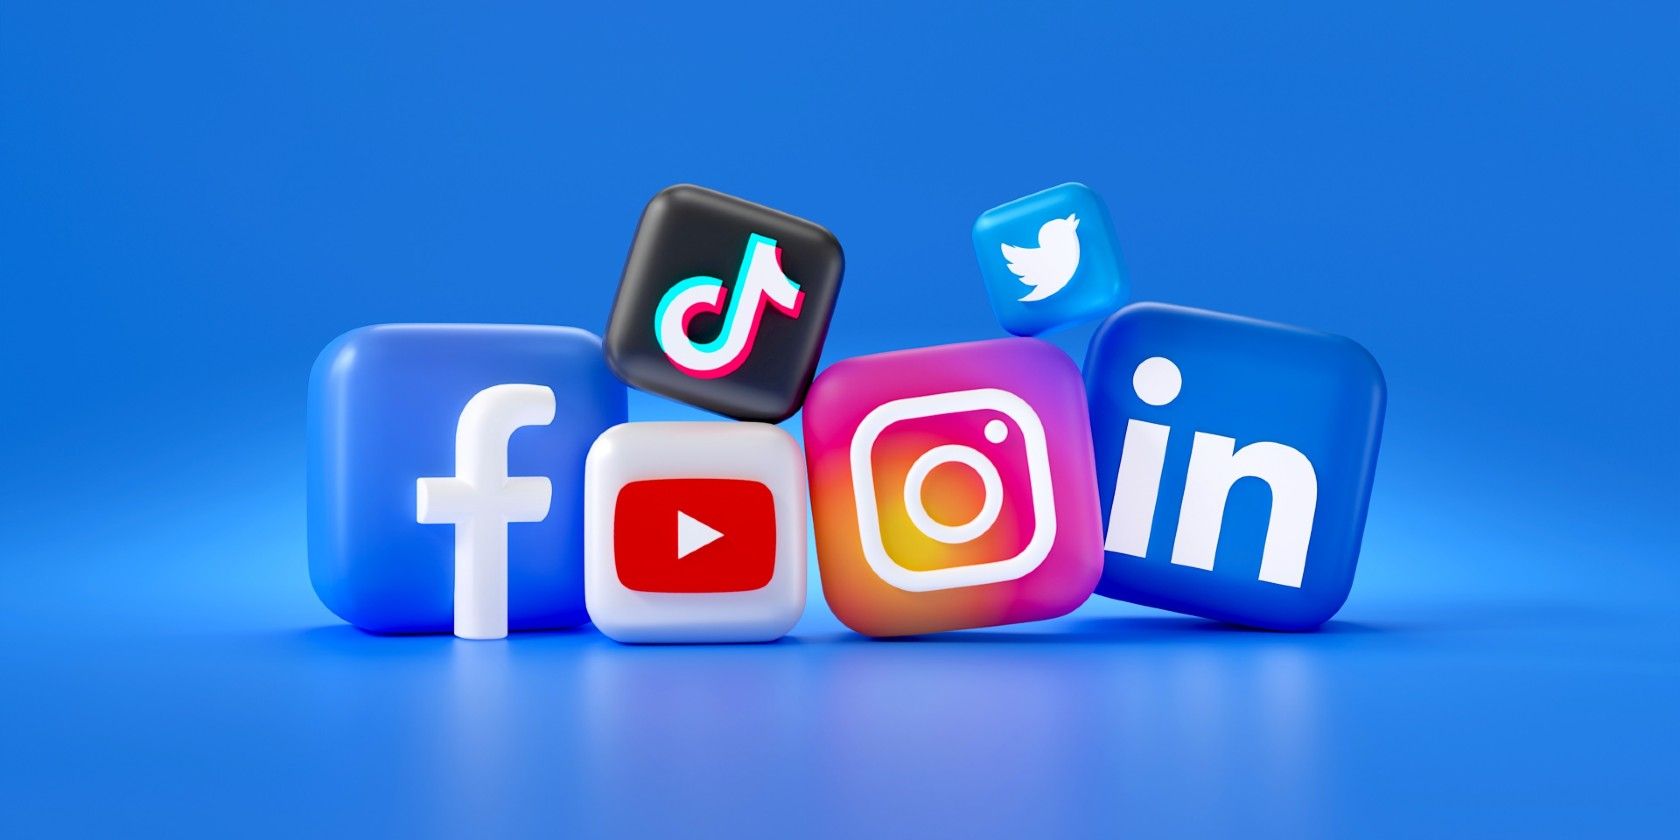 Social media icons for Facebook, TikTok, YouTube, Instagram, Twitter, and LinkedIn on a blue background